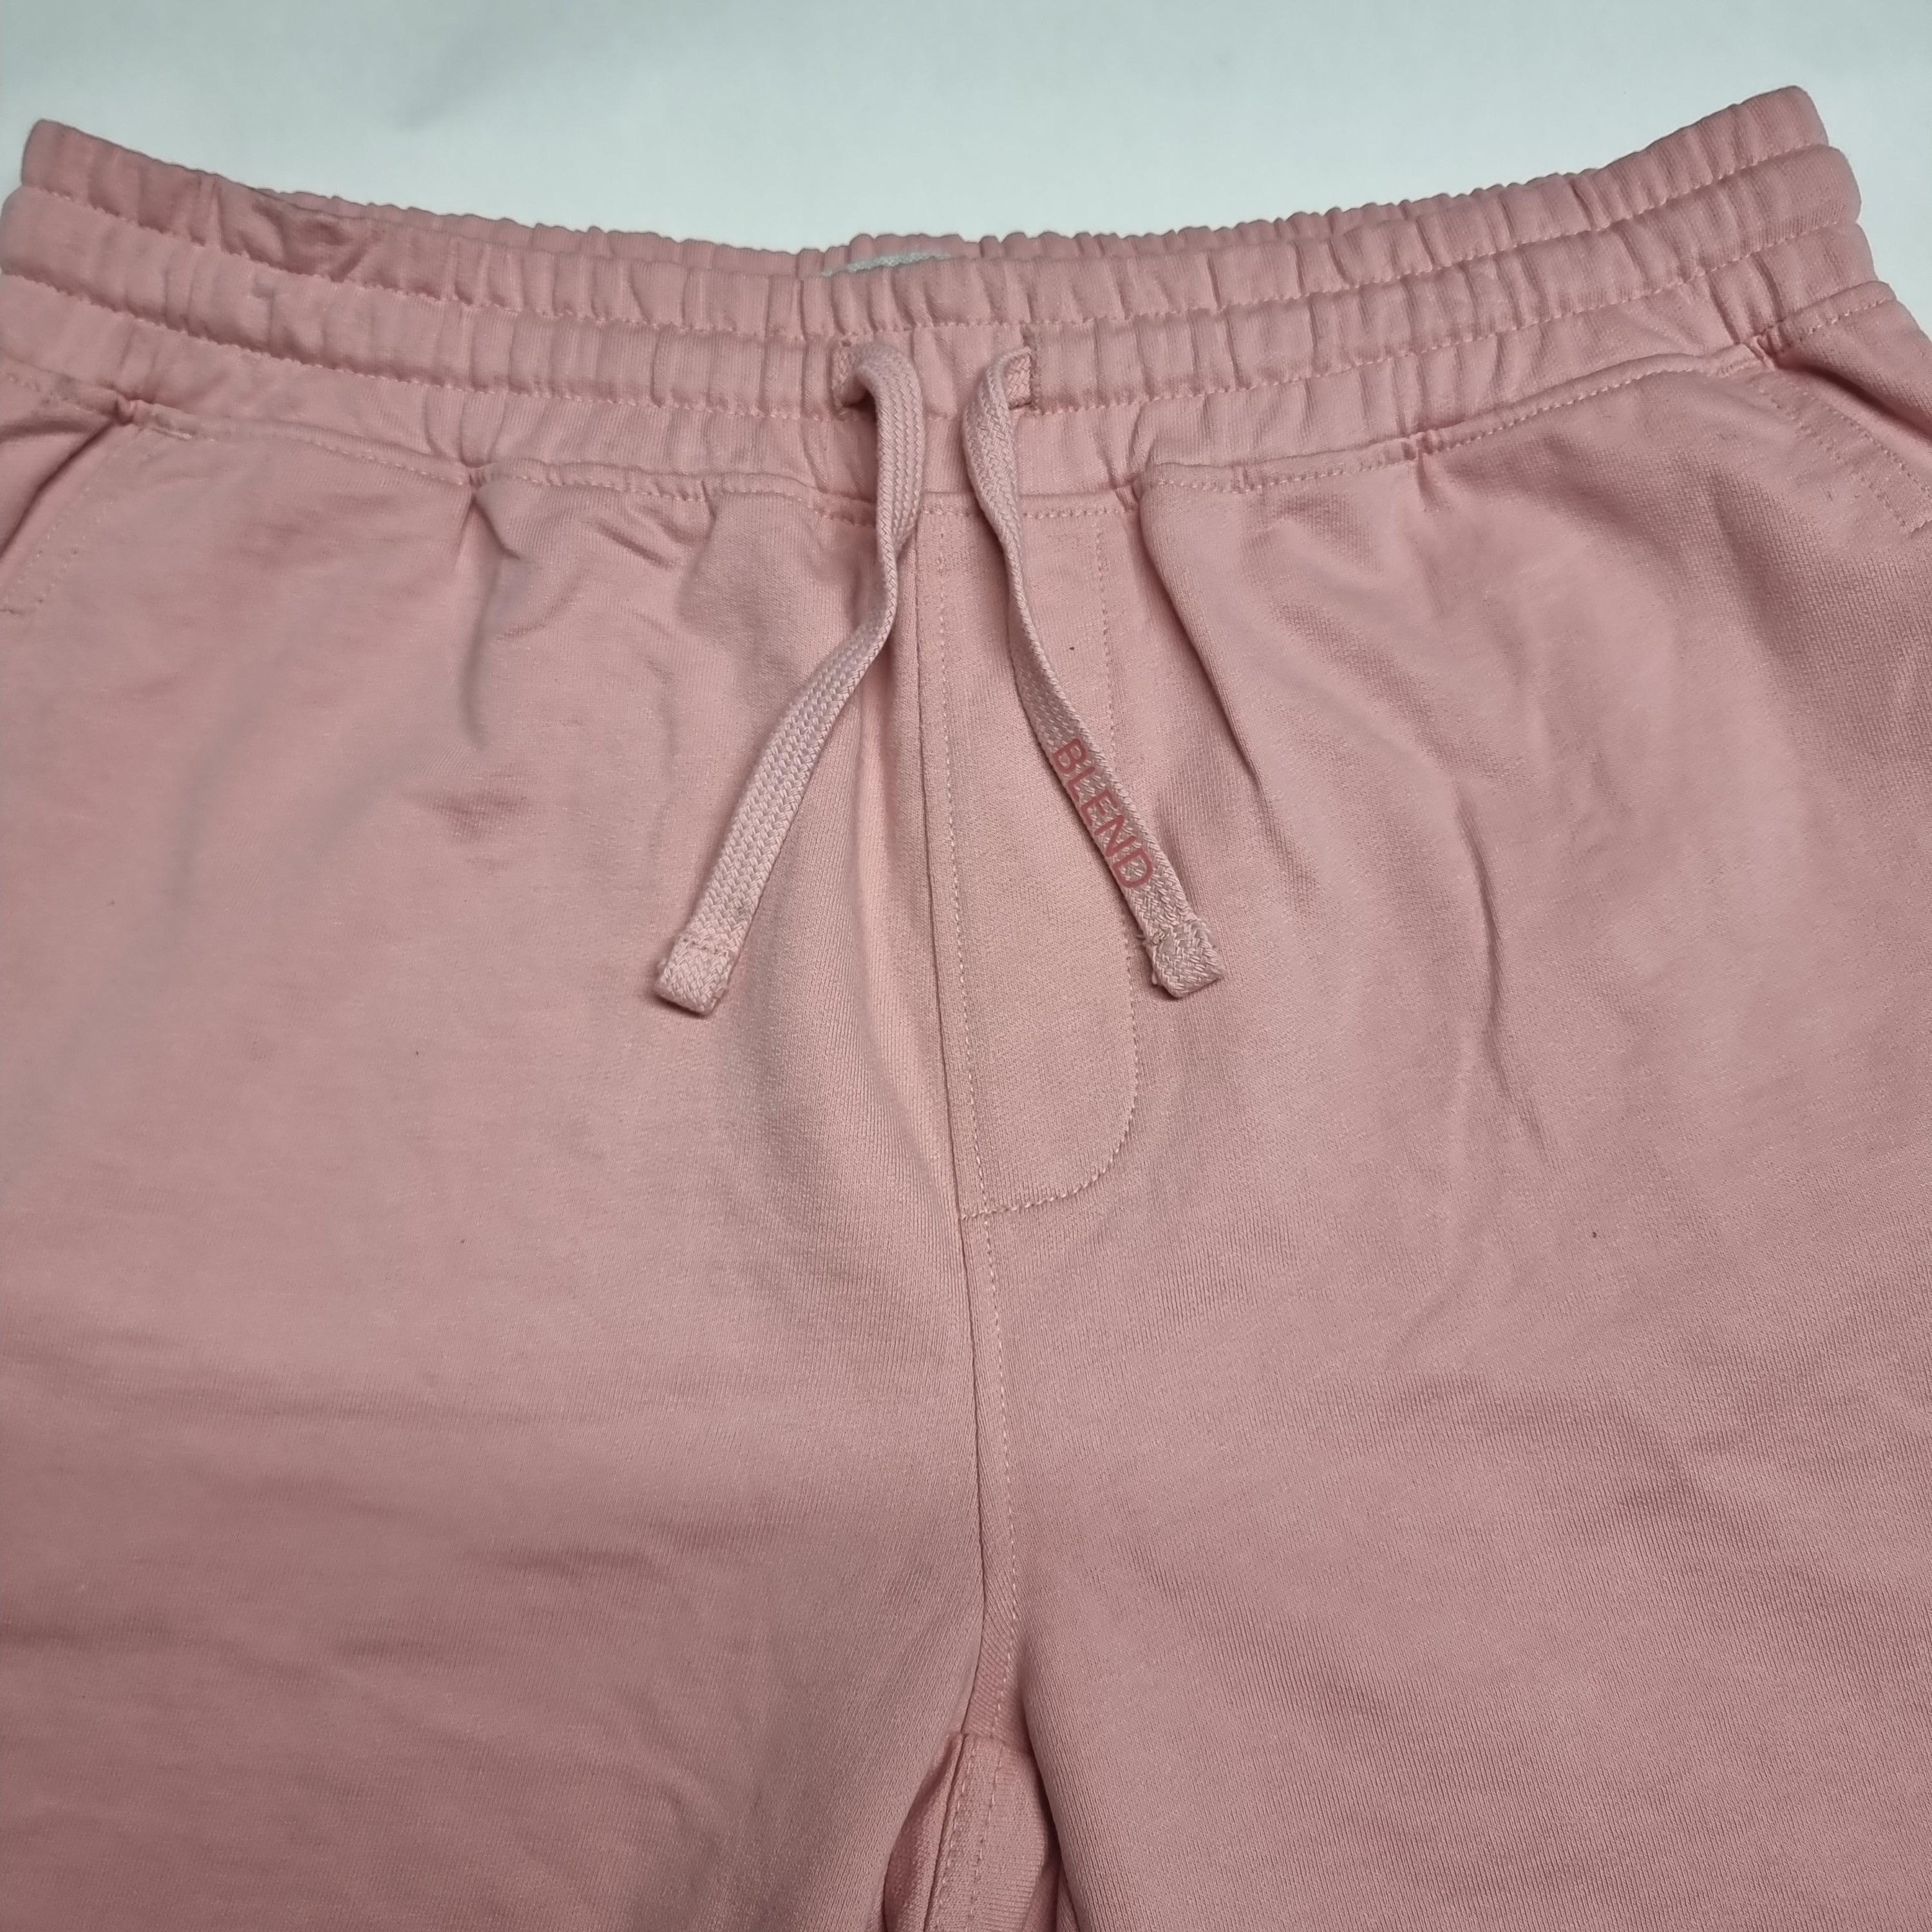 Pink Cotton Blend shorts